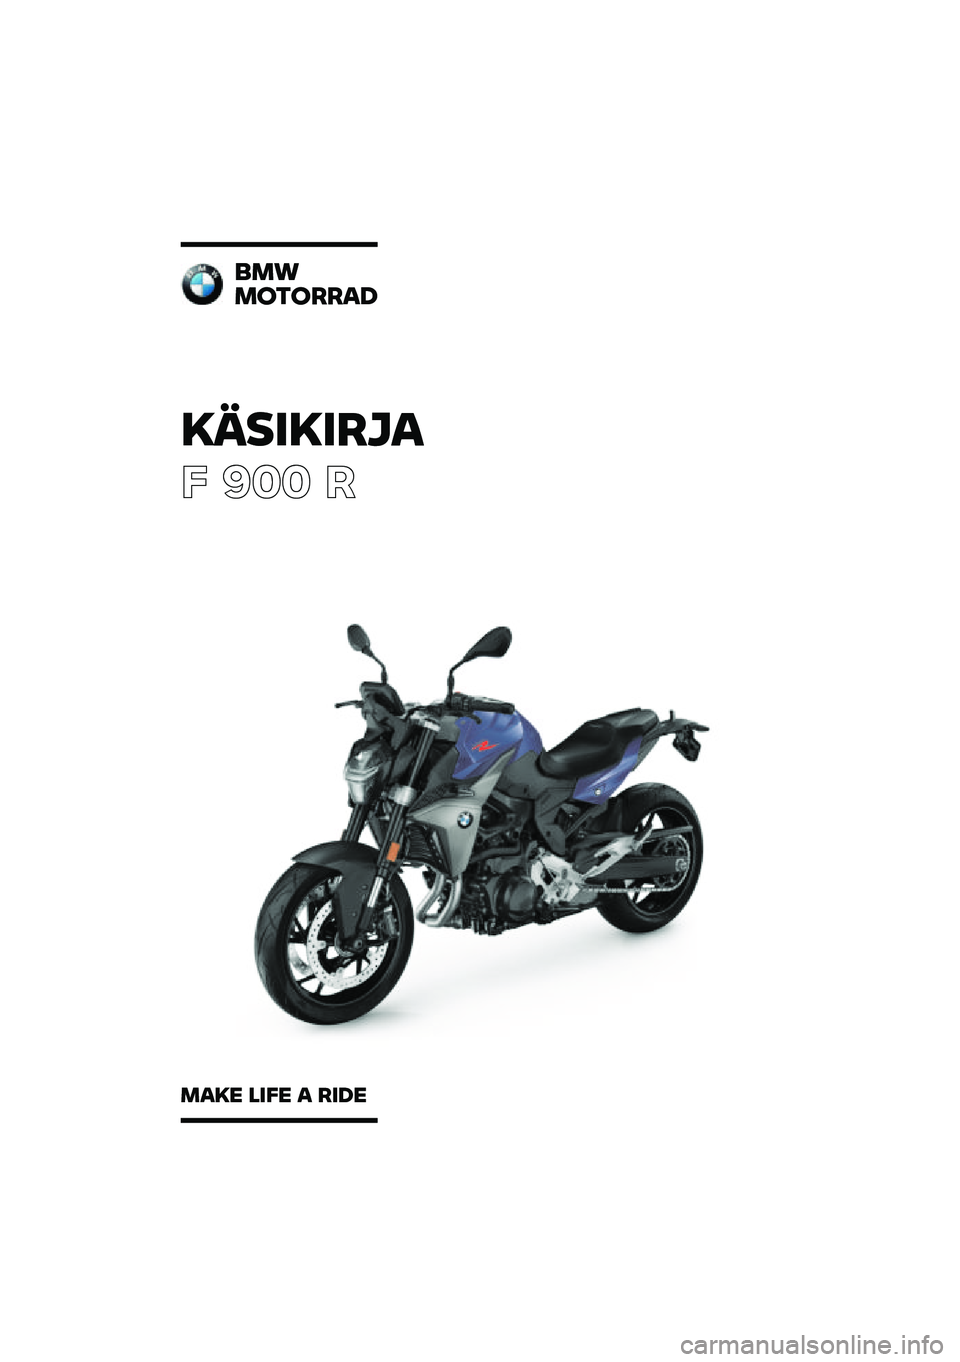 BMW MOTORRAD F 900 R 2020  Käsikirja (in Finnish) �������\b�	�
� ��� �
�
��\f
��
��
�\b�\b��
���� ���� � �\b��� 